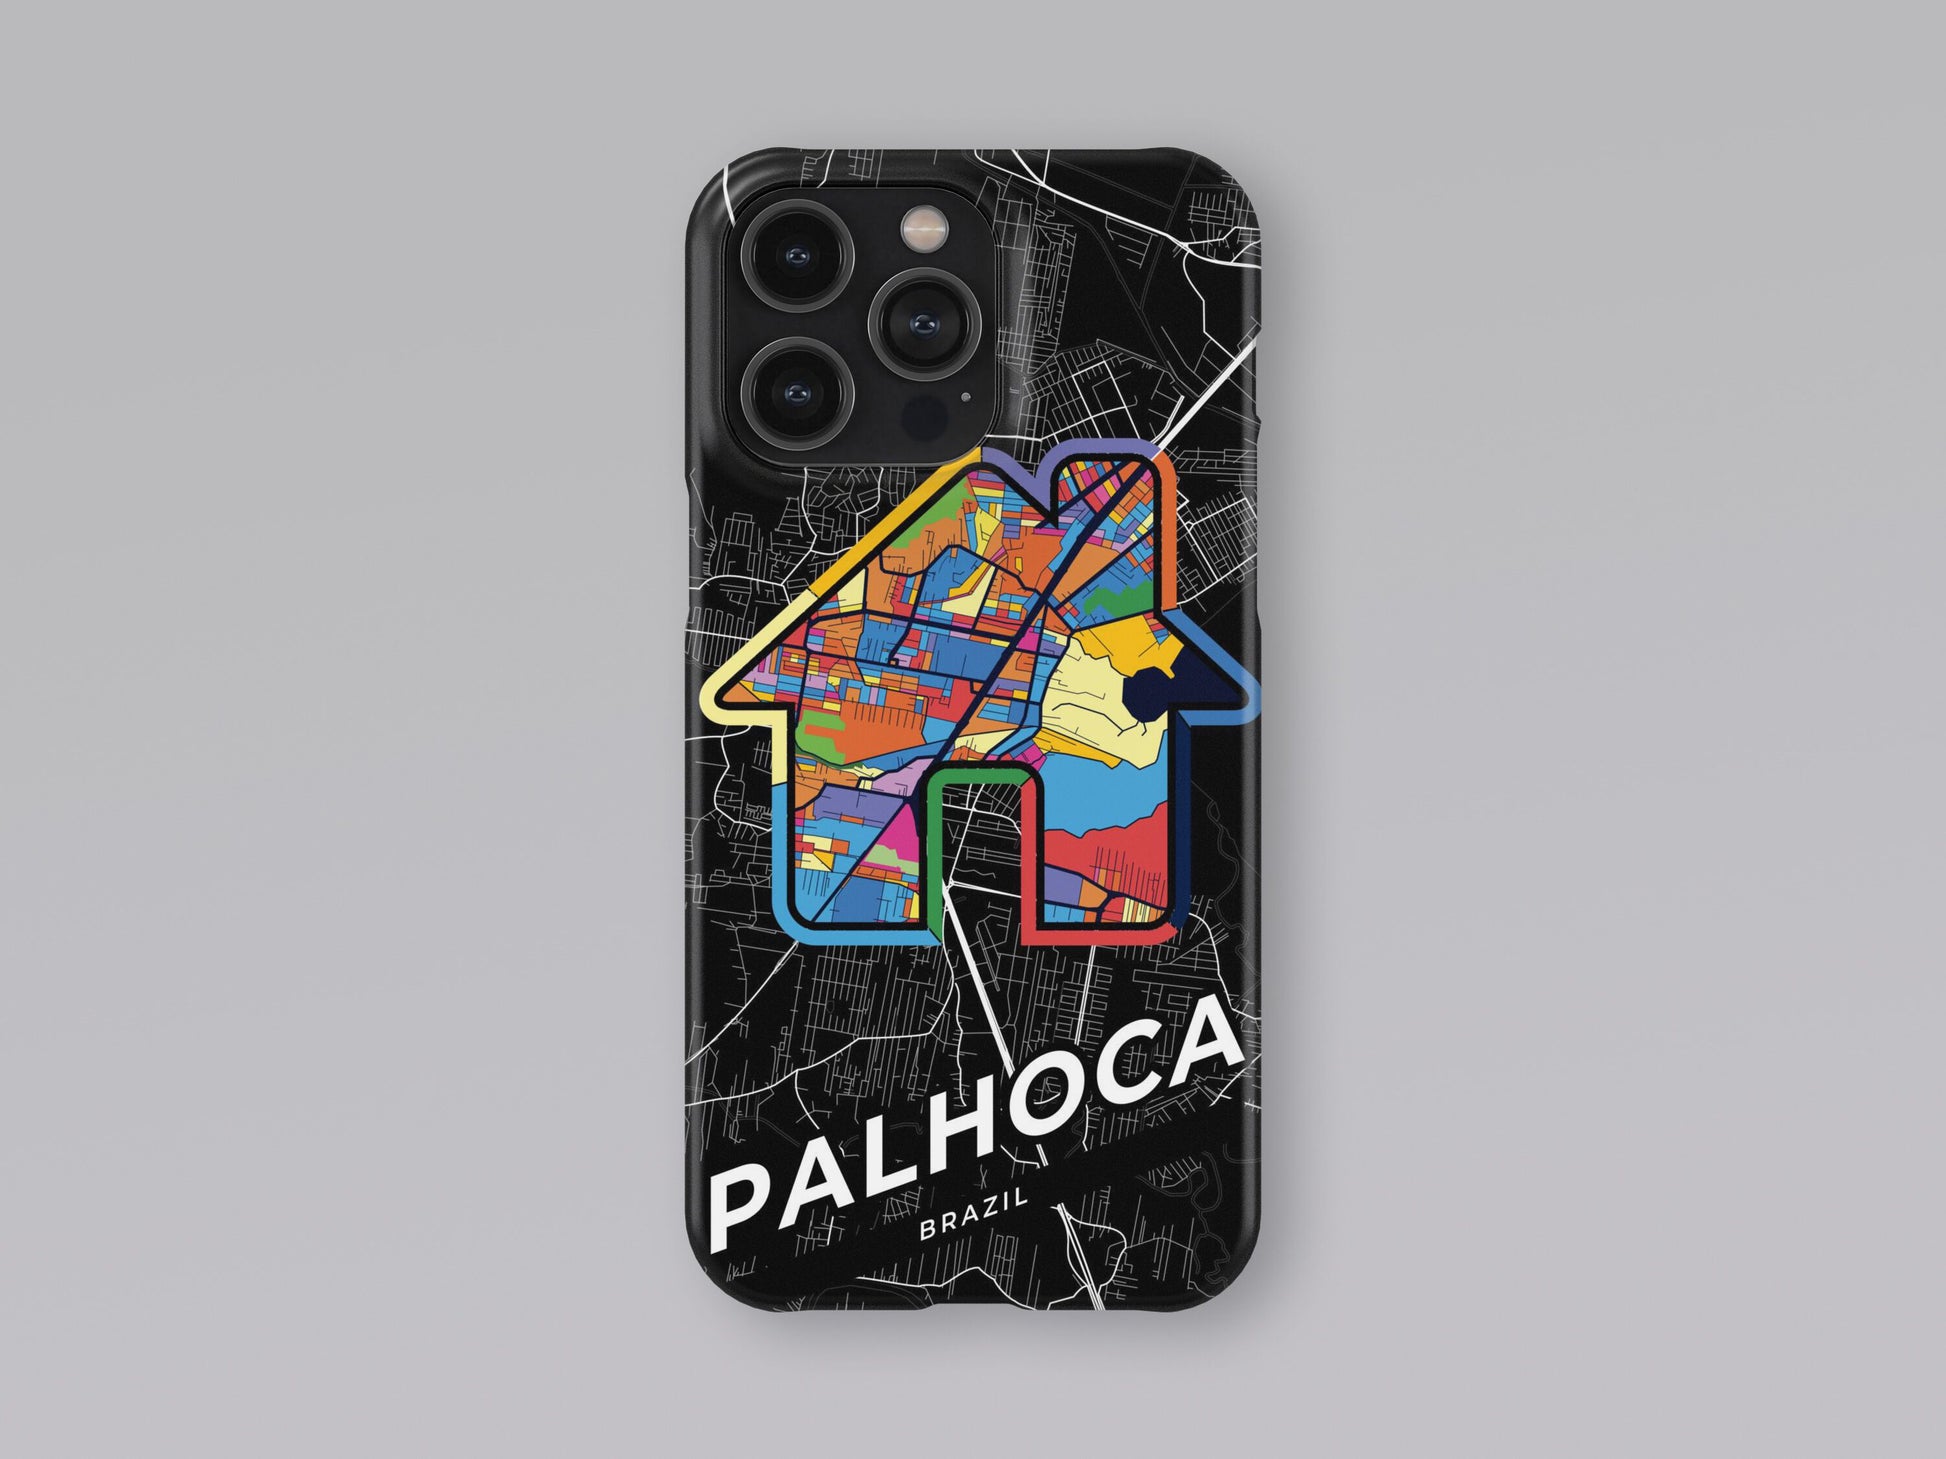 Palhoca Brazil slim phone case with colorful icon 3